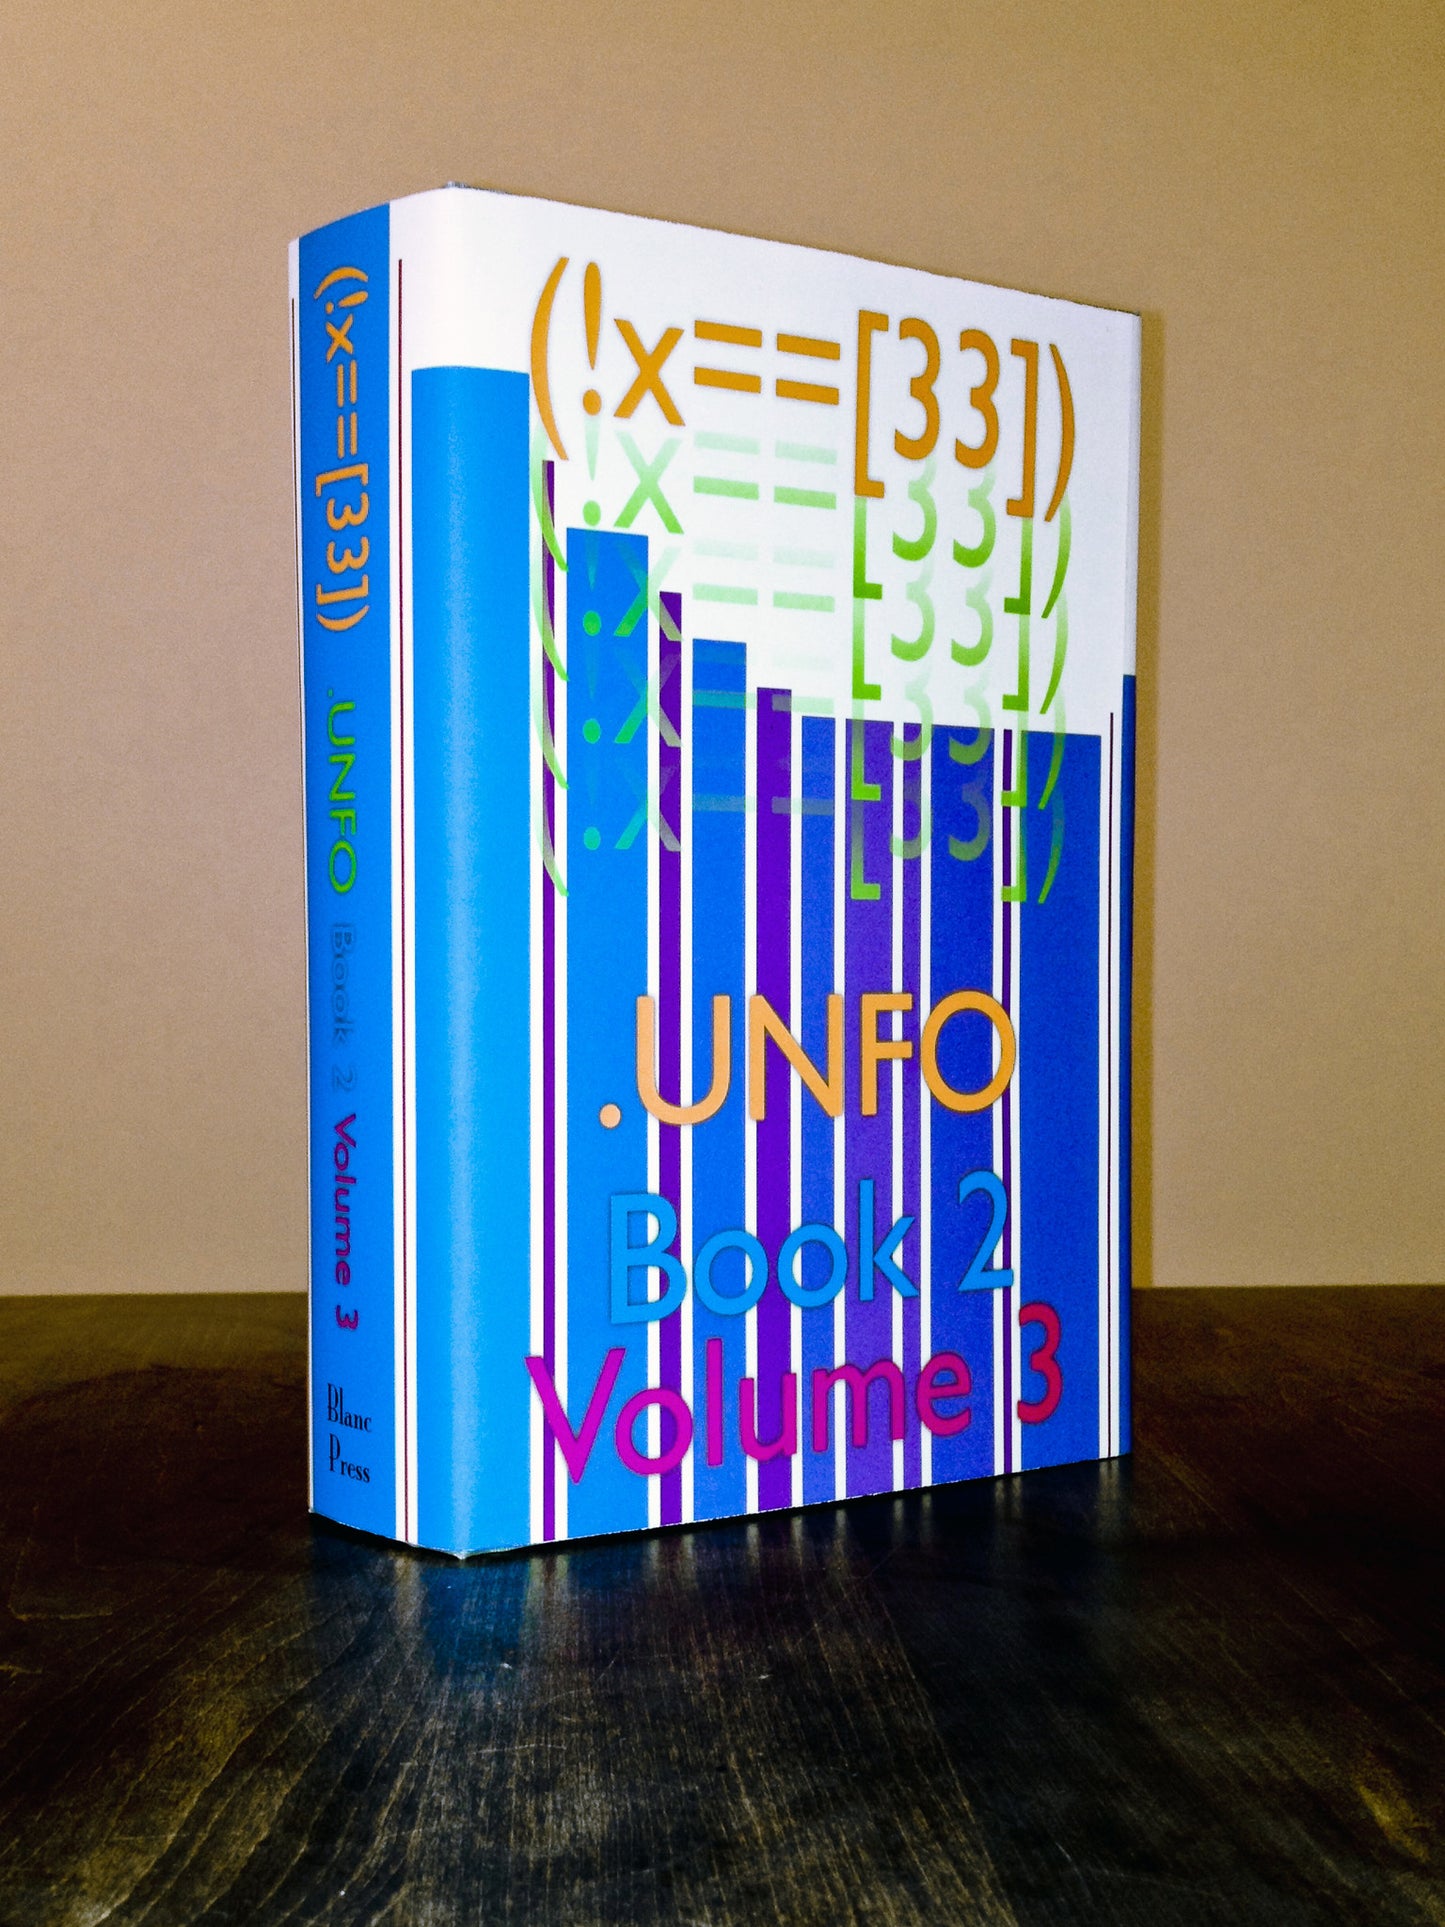 .UNFO (!X==[33]) BOOK 2 VOLUME 3